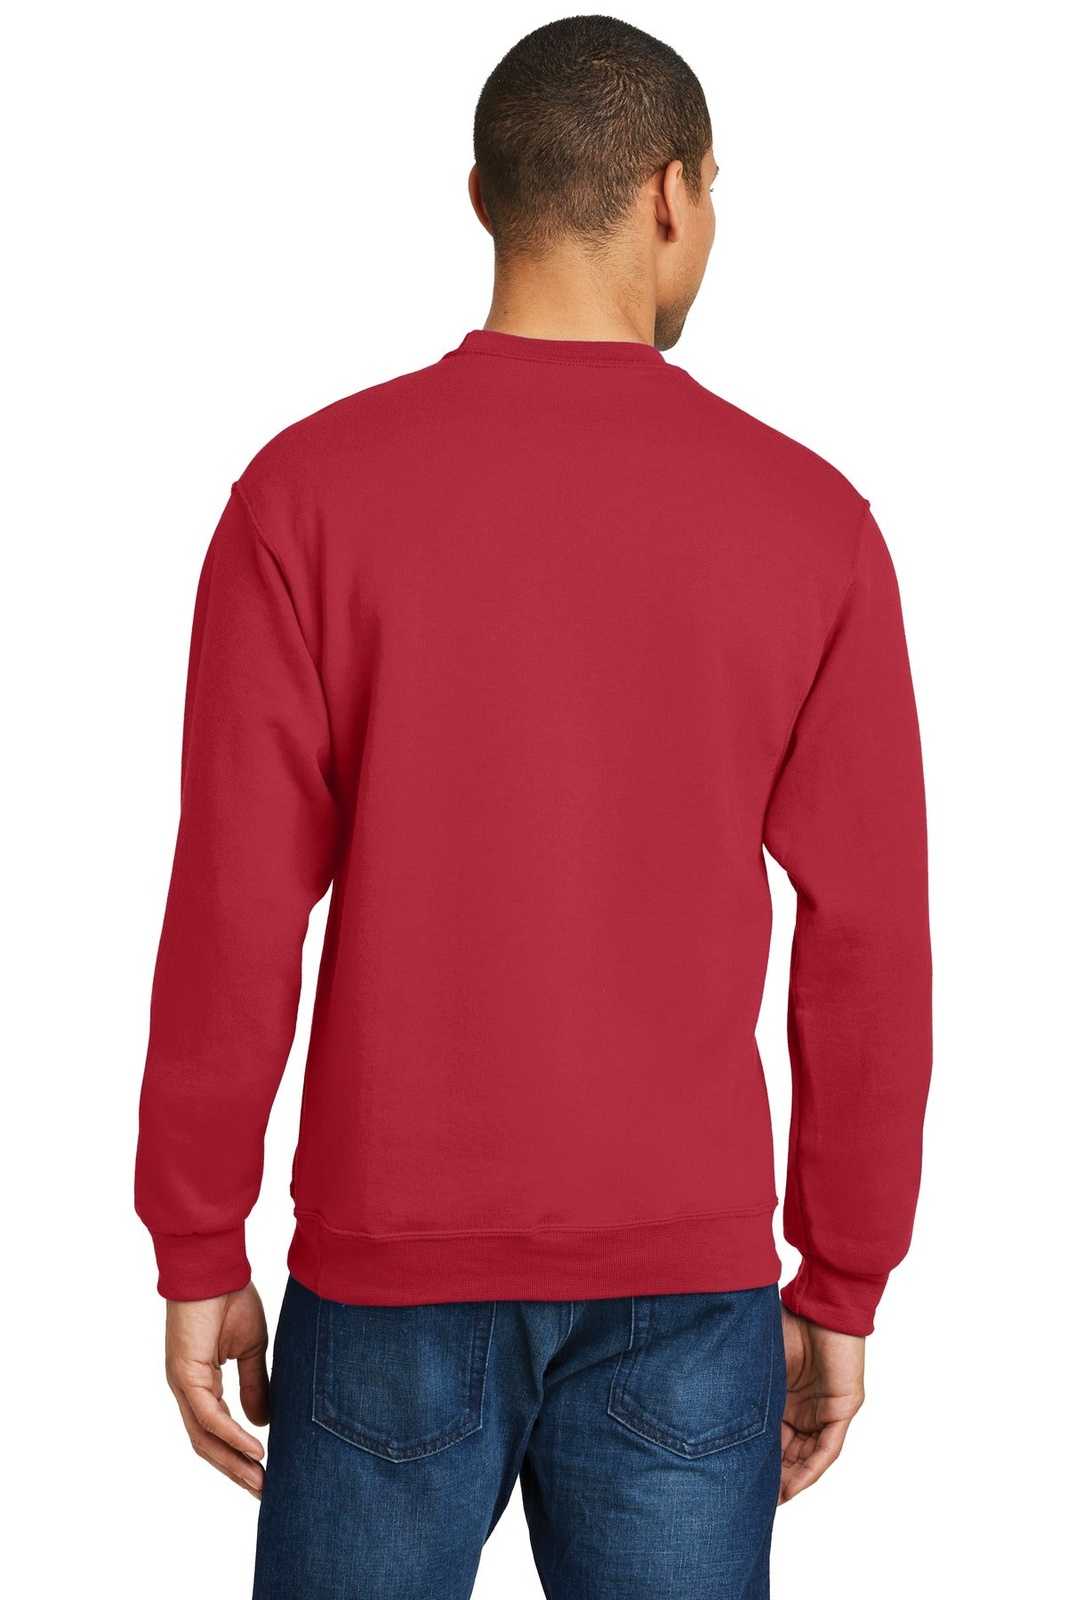 Jerzees 562M Nublend Crewneck Sweatshirt - True Red - HIT a Double